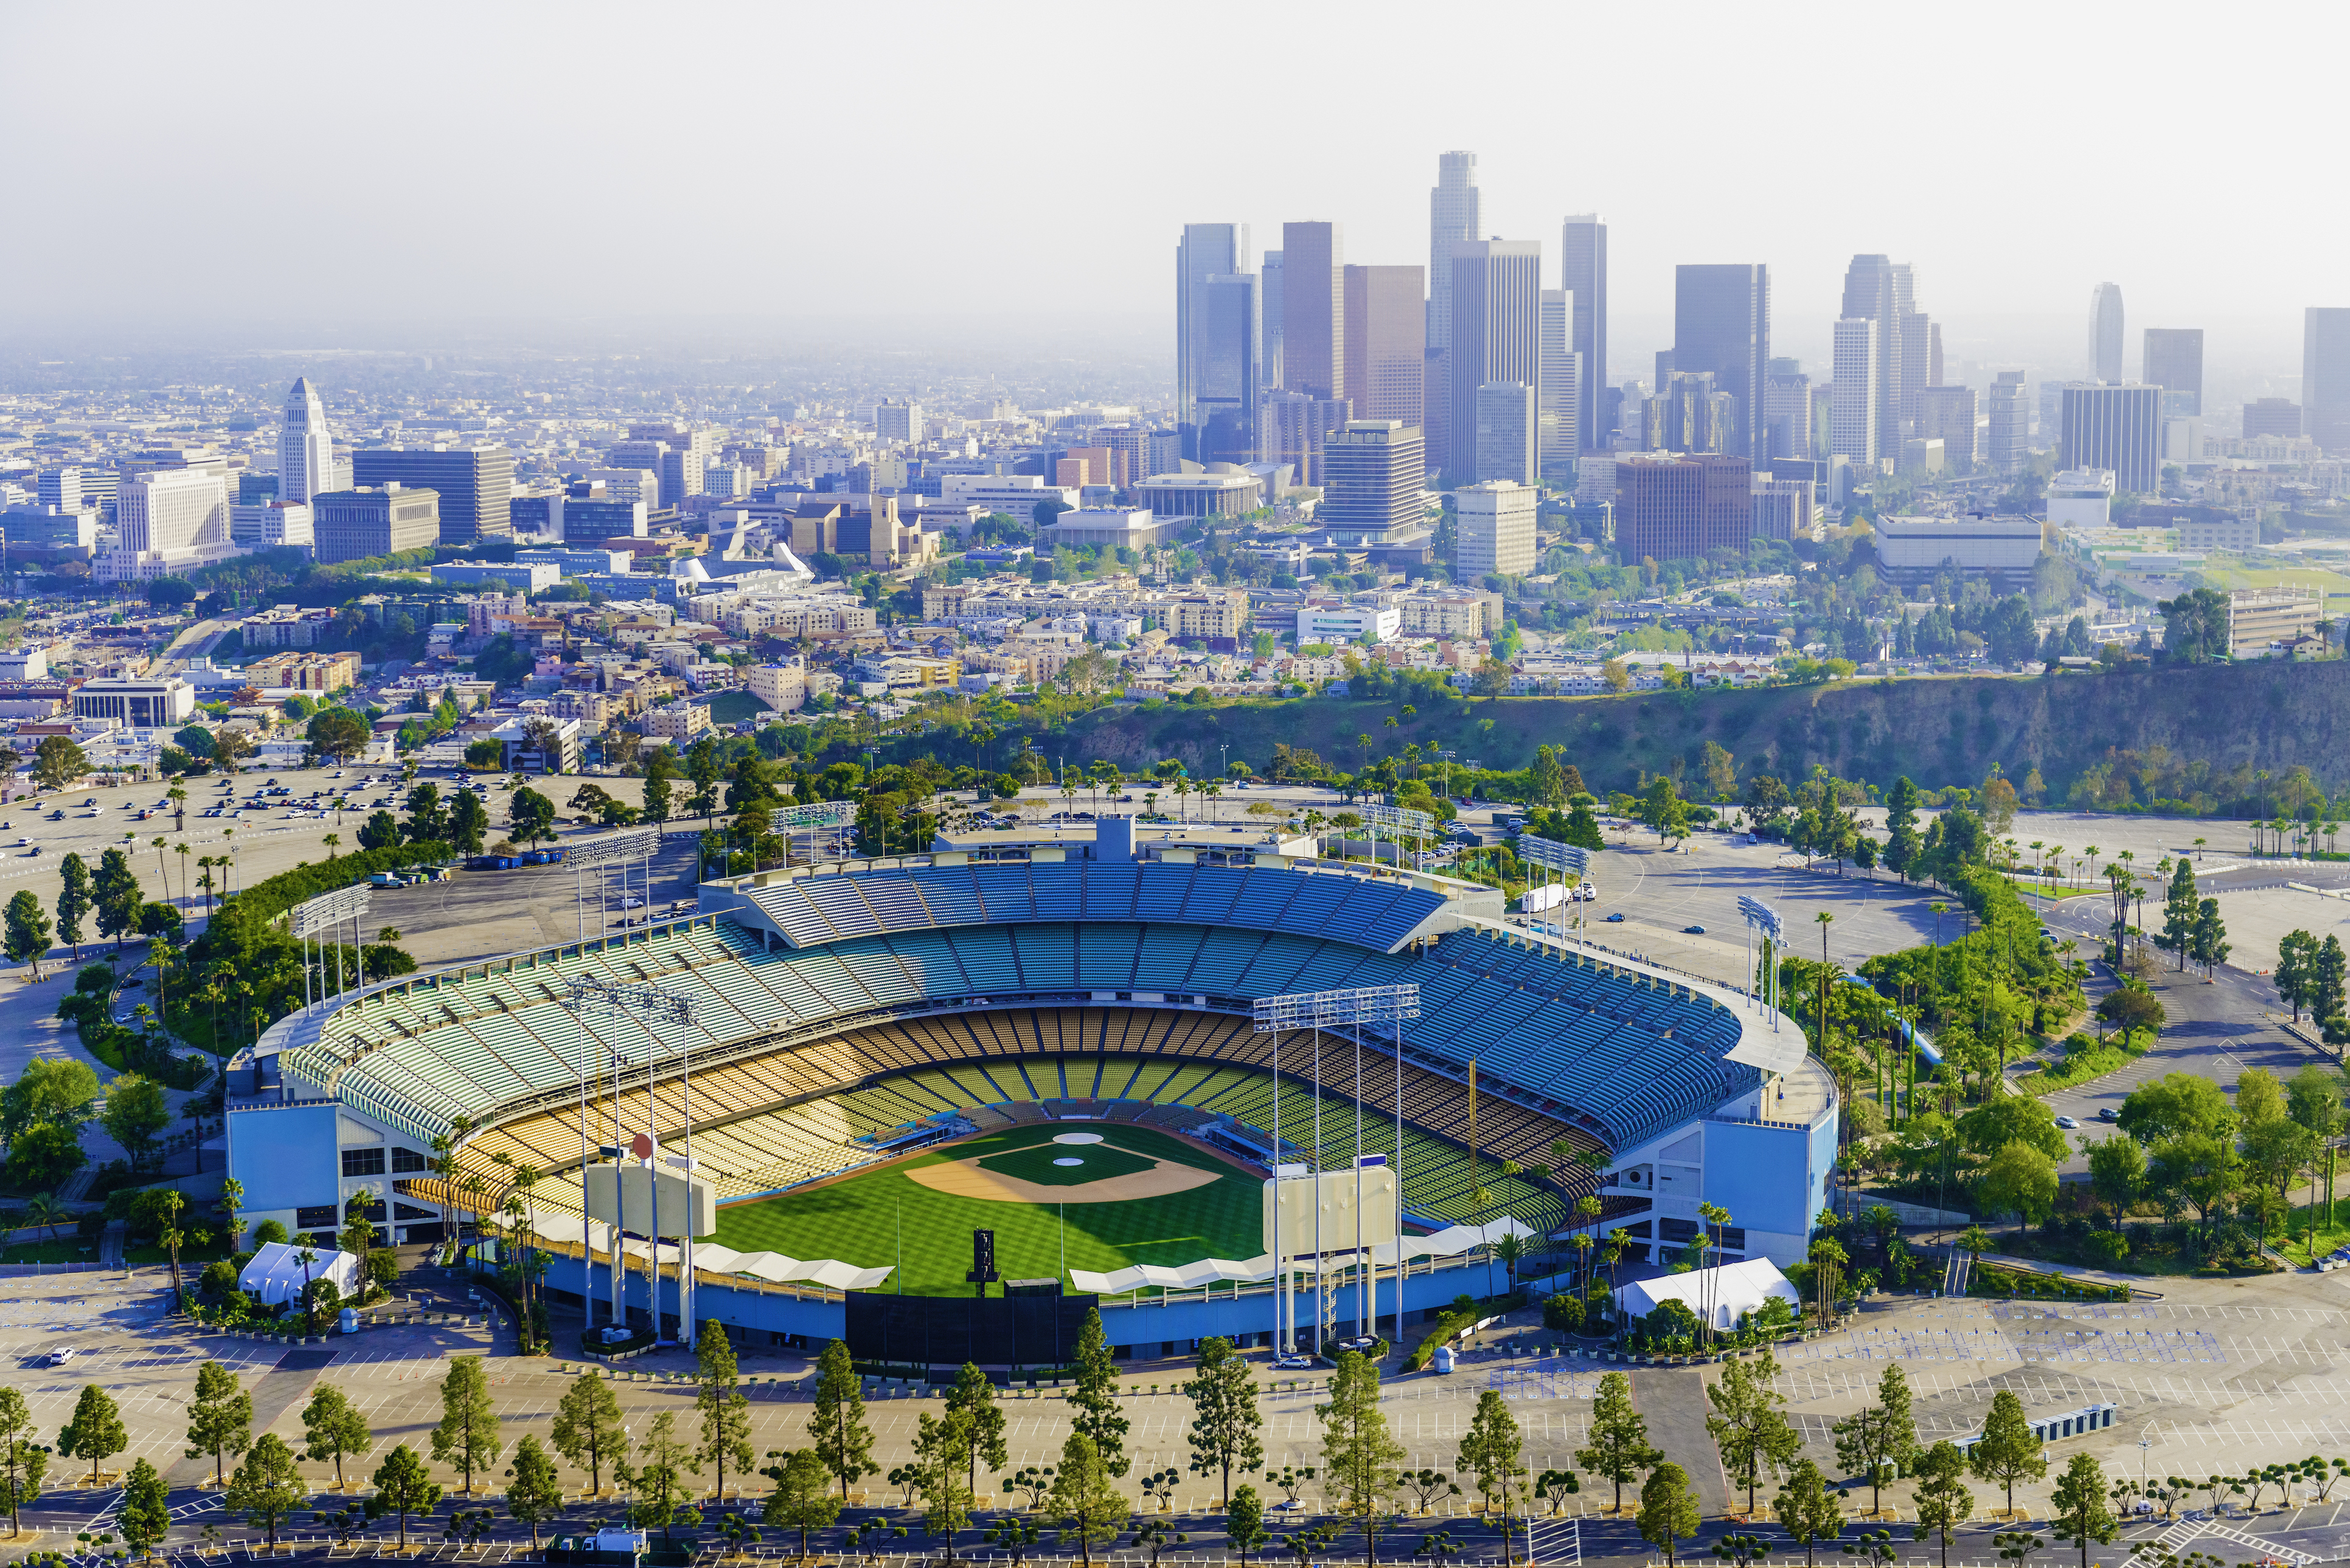 Best MLB ballparks: We rank all 30 stadiums for 2023 season